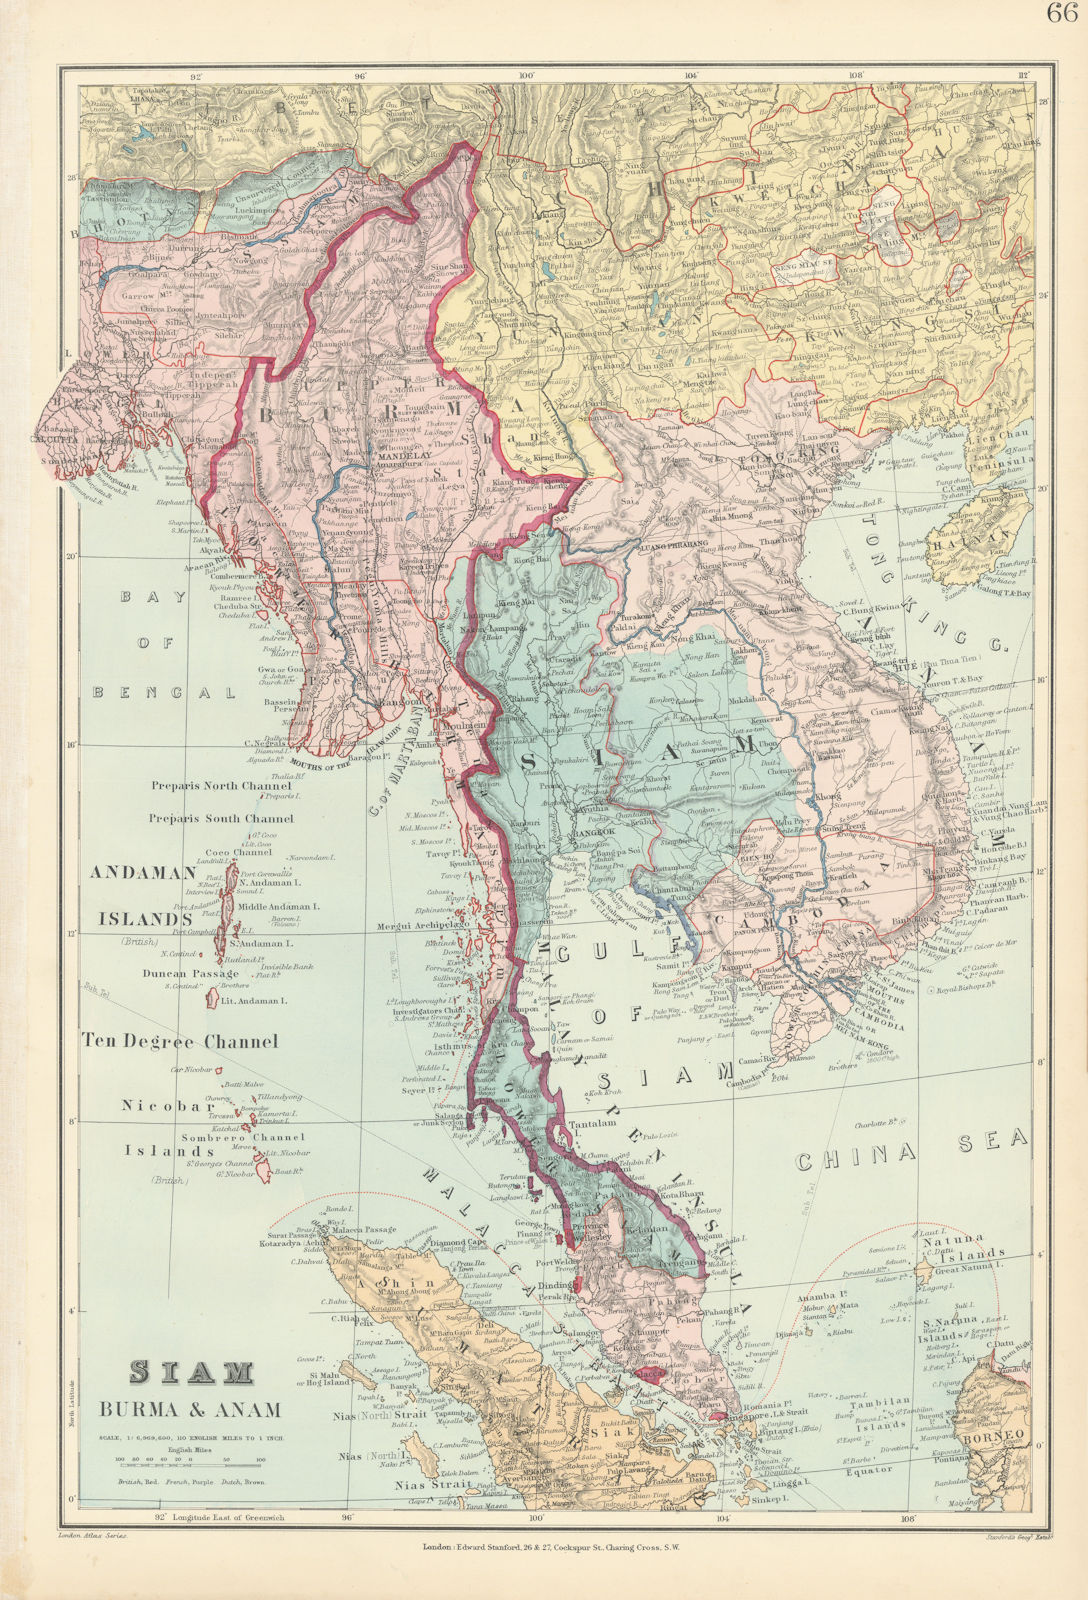 Indo-China. Indochina. Siam Annam Burma Thailand Cambodia. STANFORD 1896 map